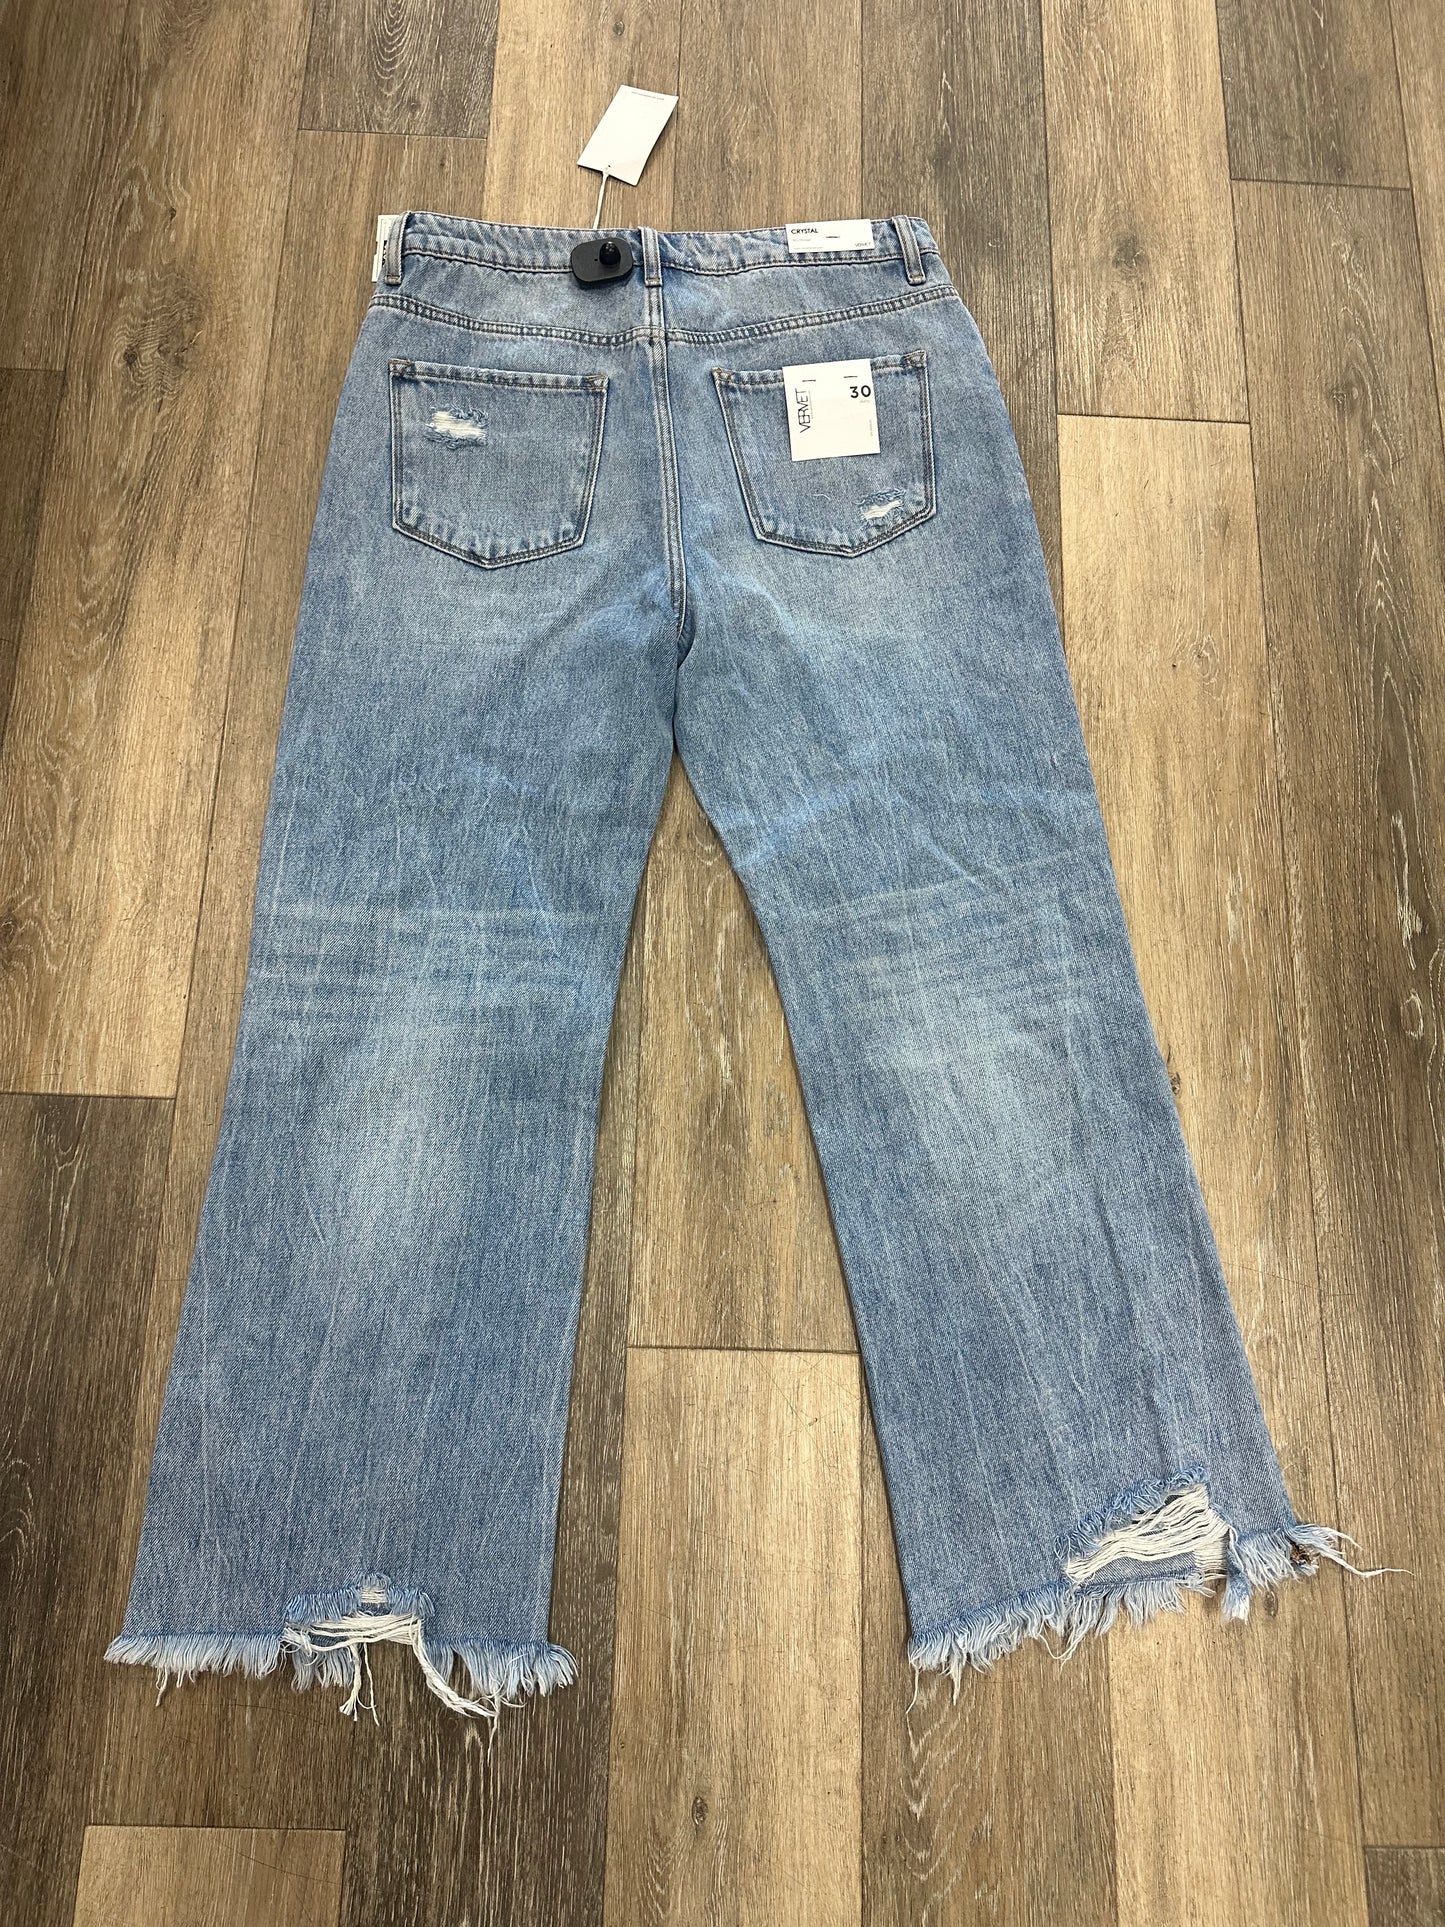 Jeans Cropped By Vervet  Size: 10